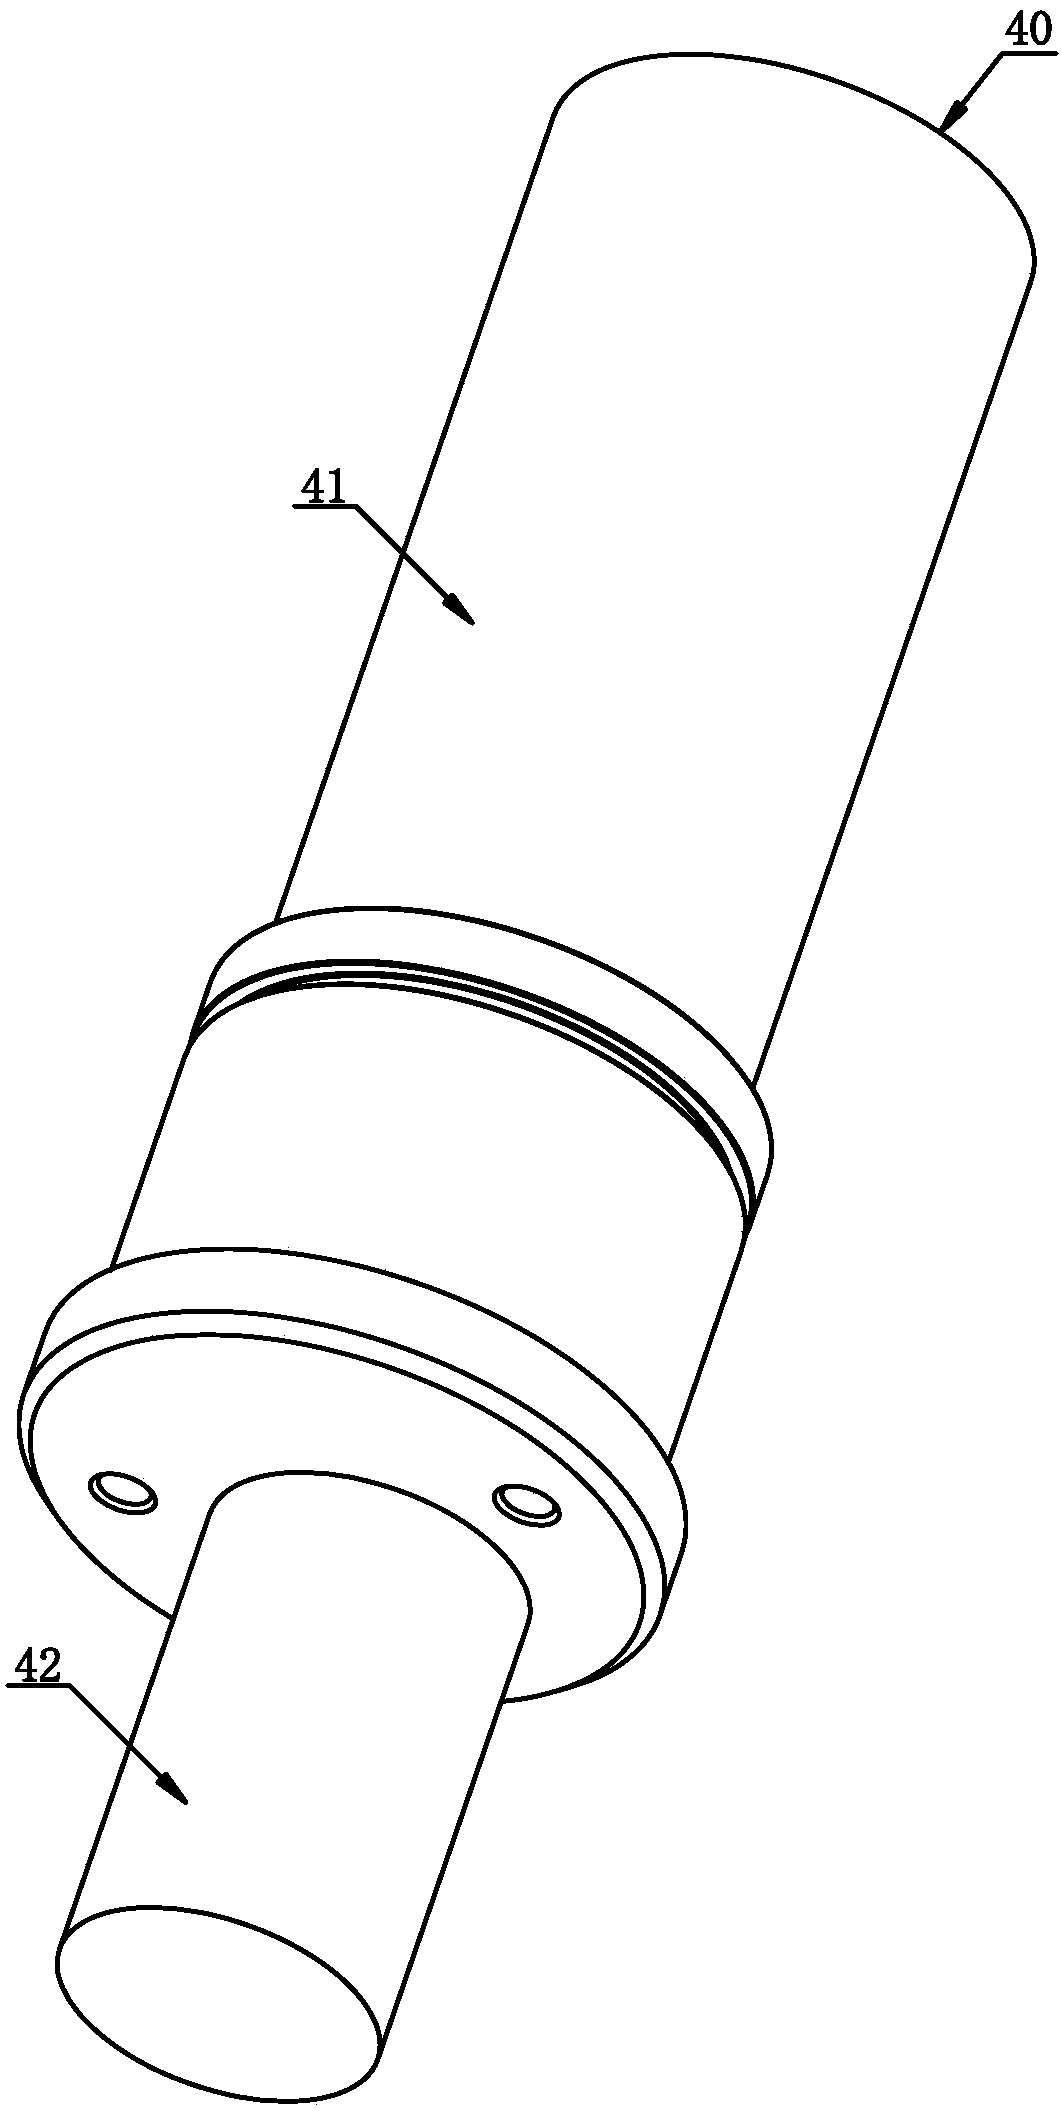 An air compressor device for an air compressor